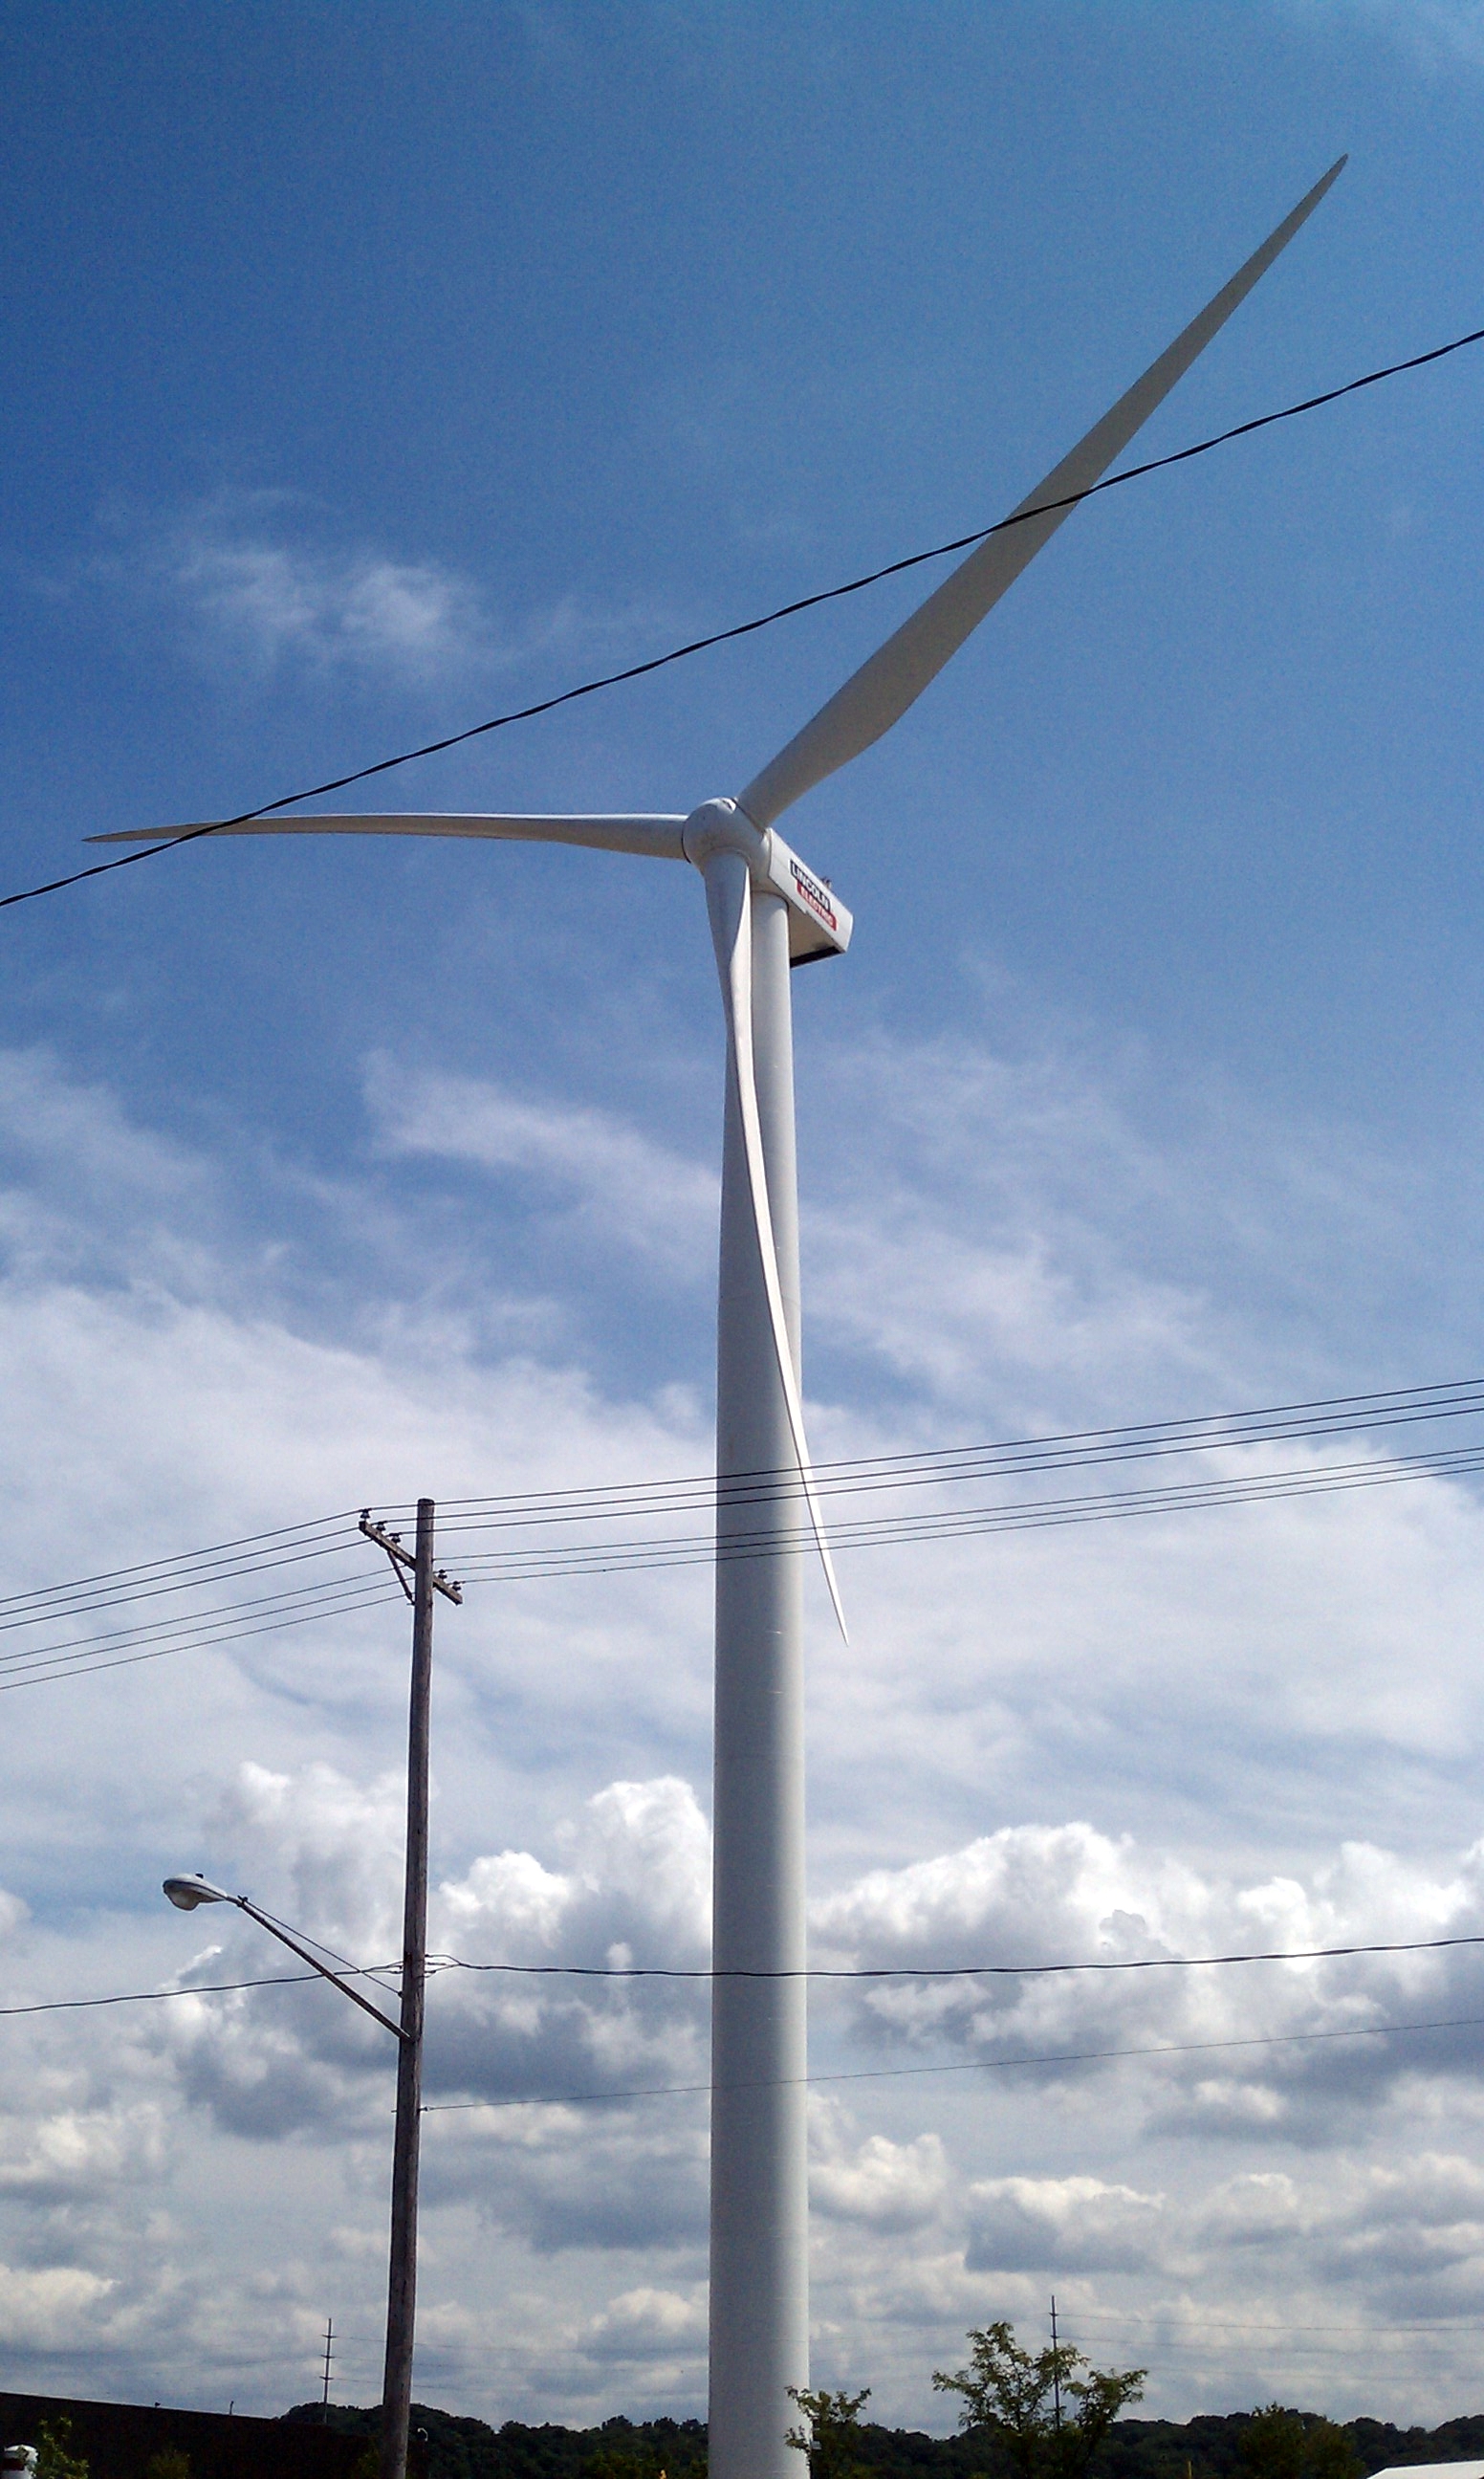 File:Lincoln Electric wind turbine.jpg - Wikimedia Commons